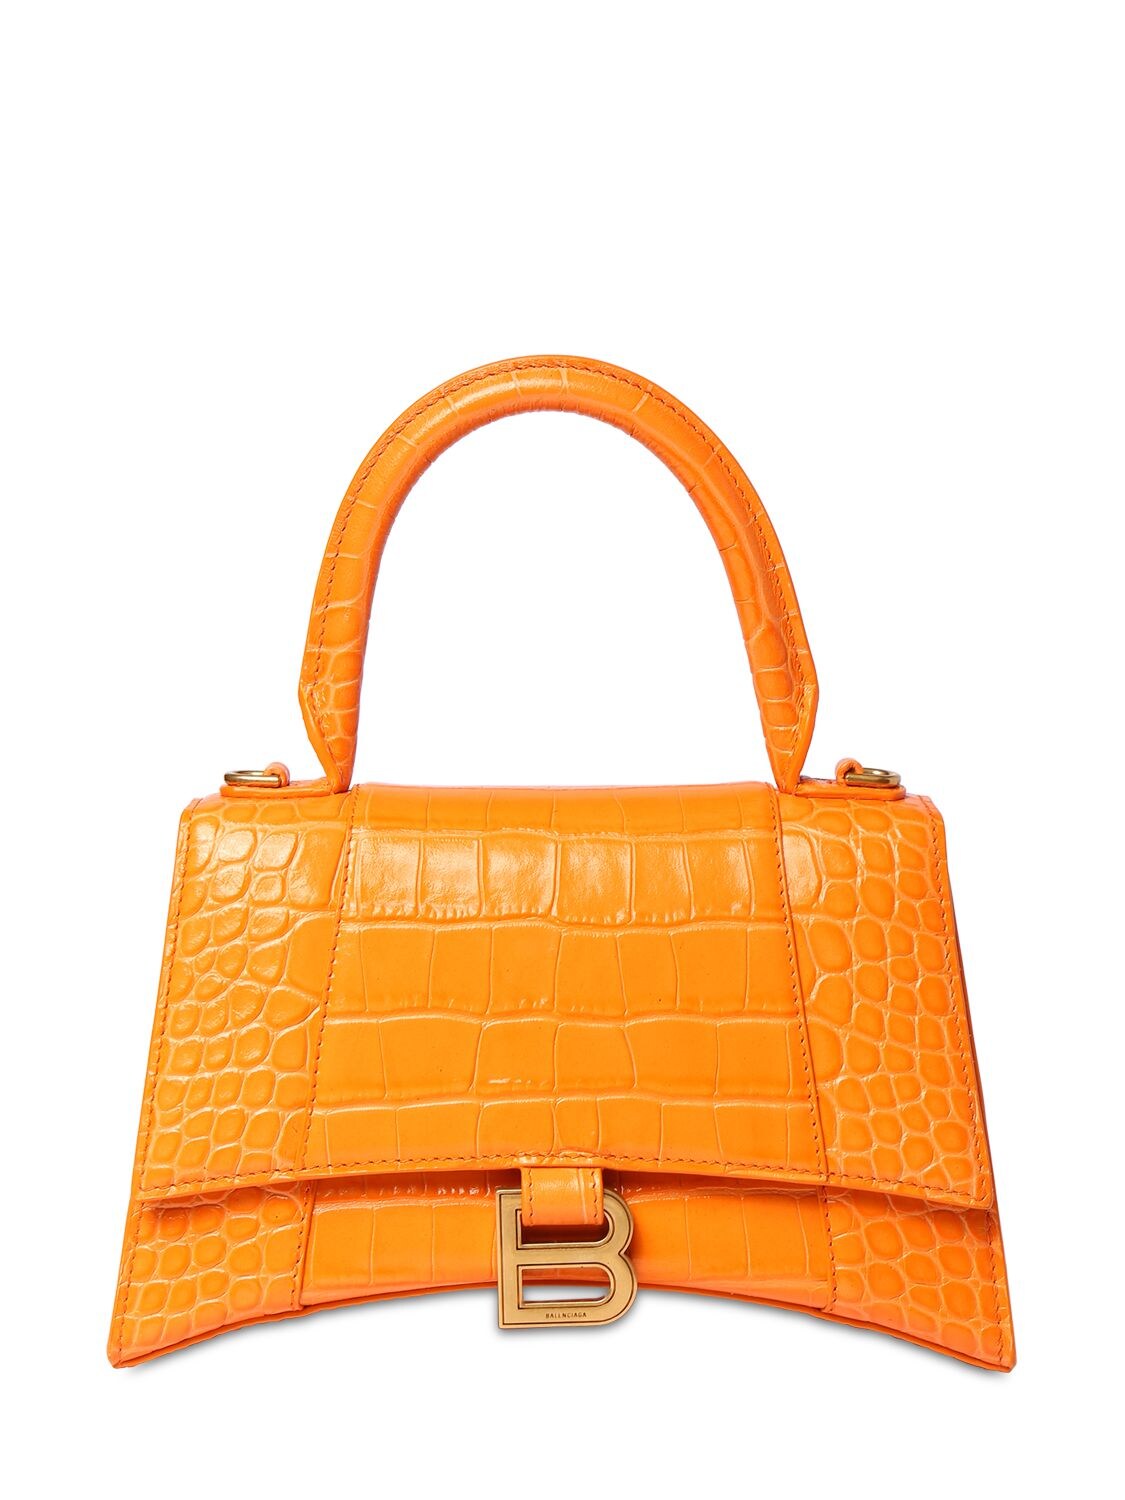 Balenciaga S Hourglass Croc Embossed Leather Bag In Orange | ModeSens